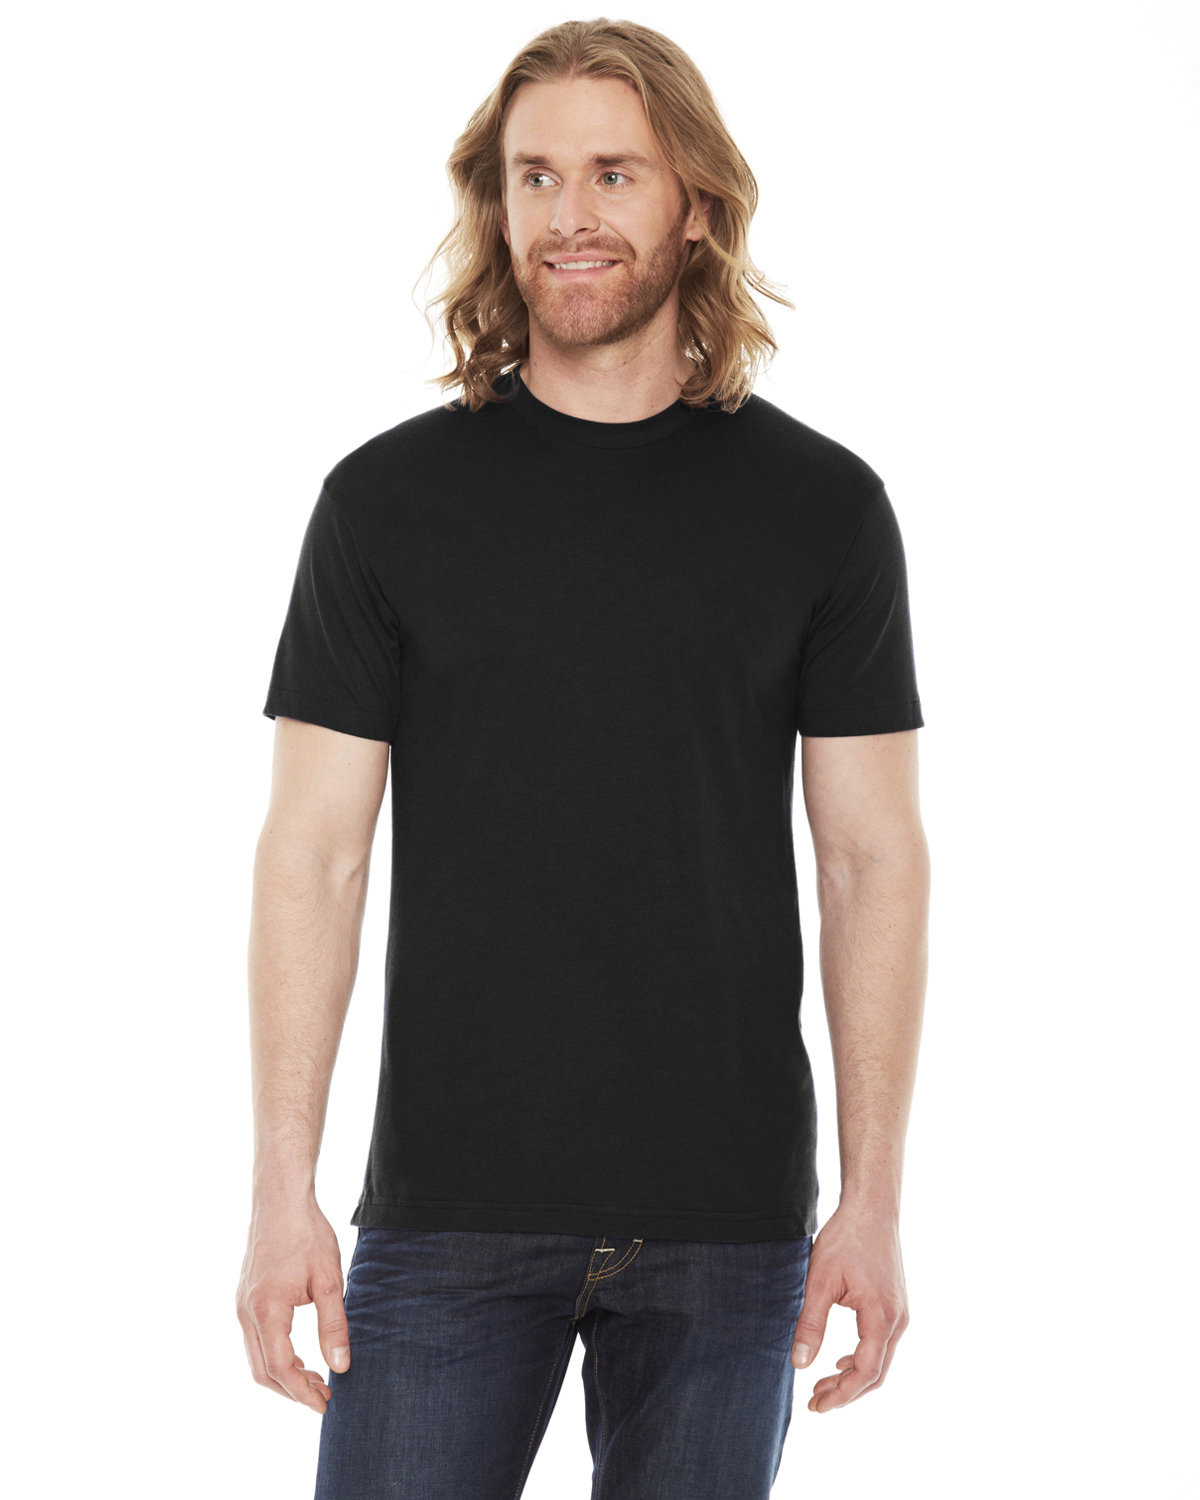 American Apparel Unisex Classic T-Shirt BLACK 